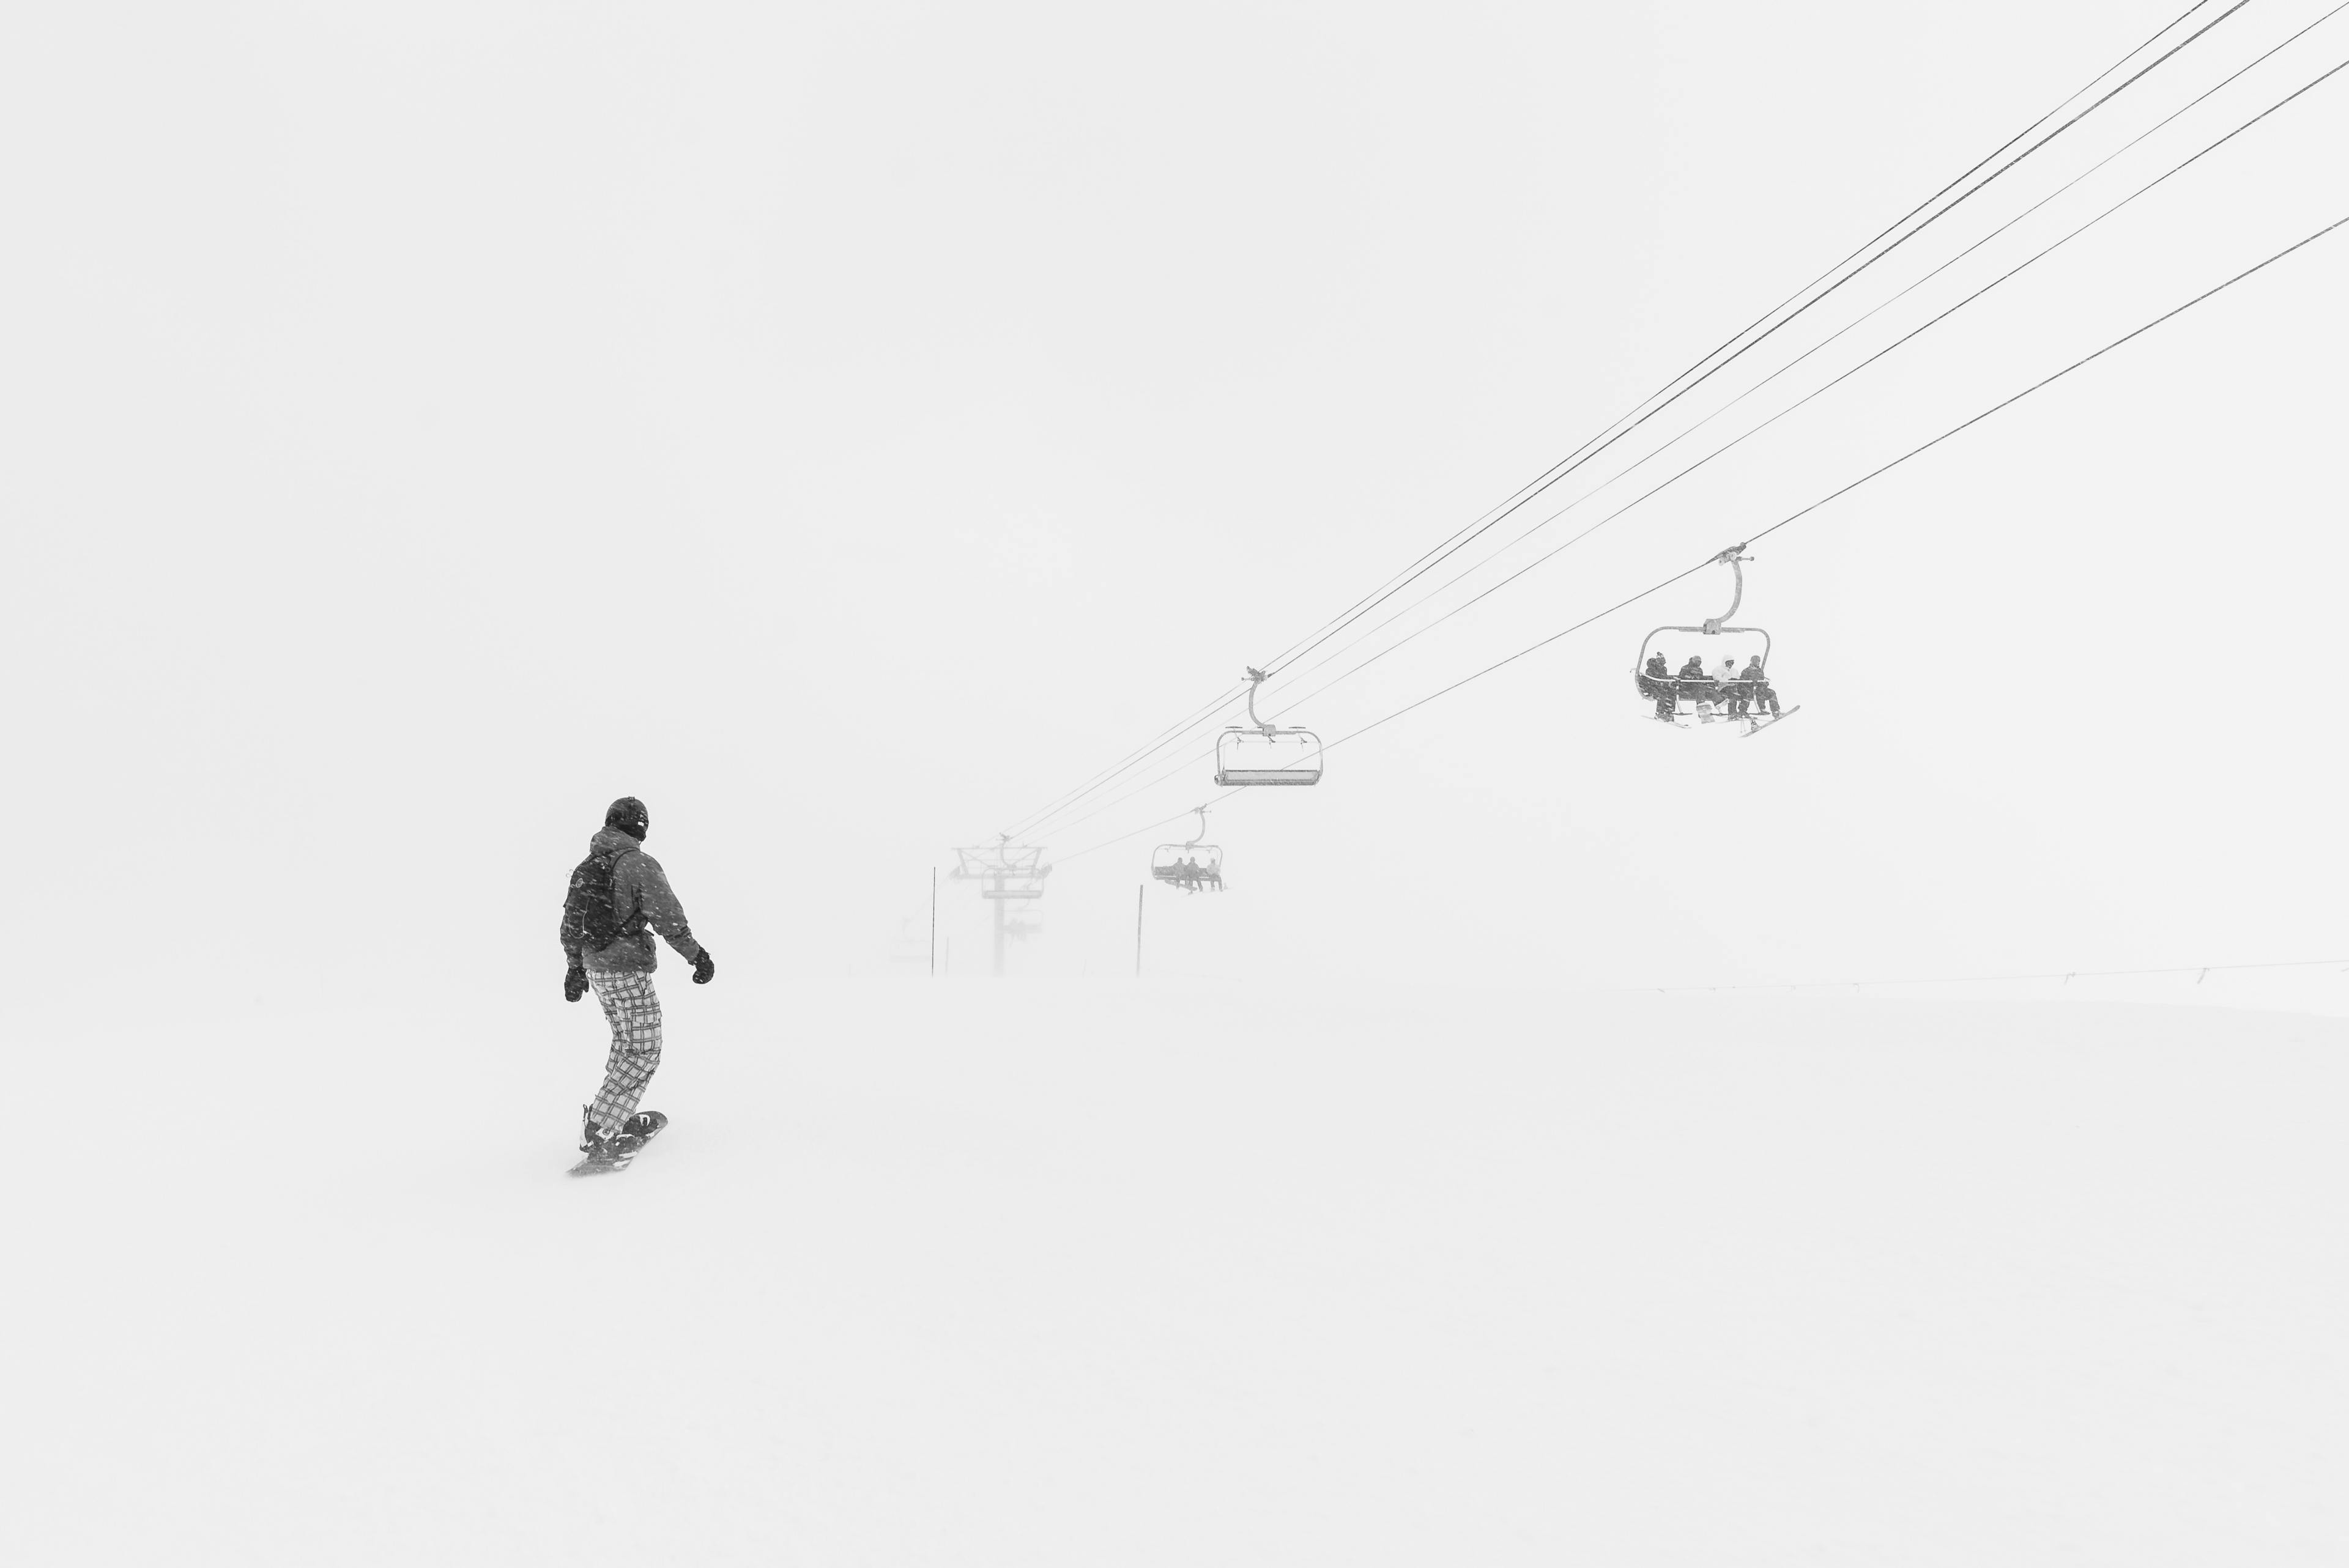 Stoten Ski resort